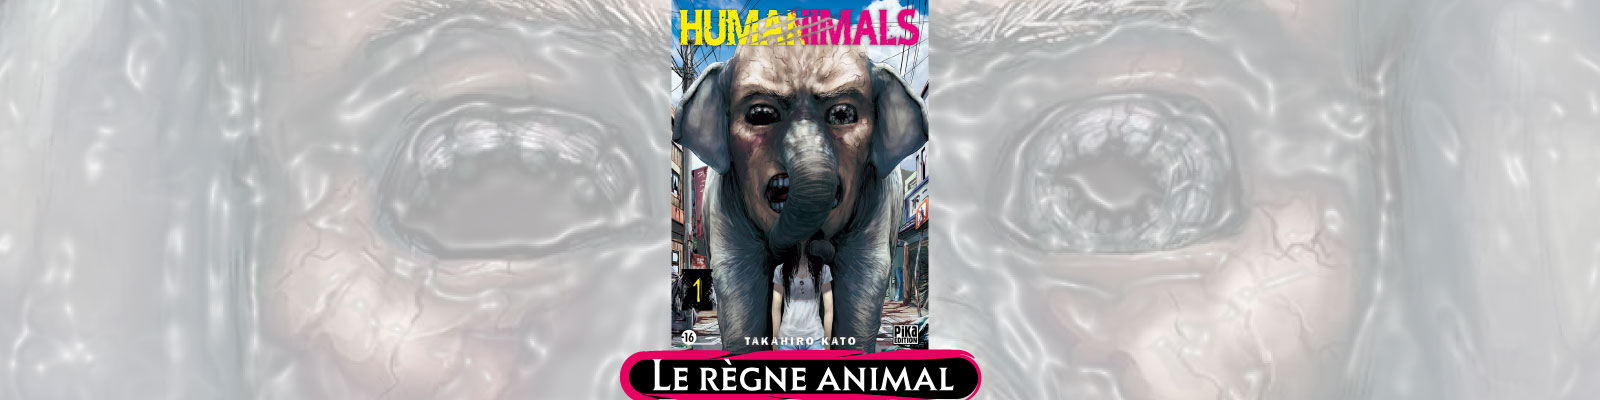 Humanimals